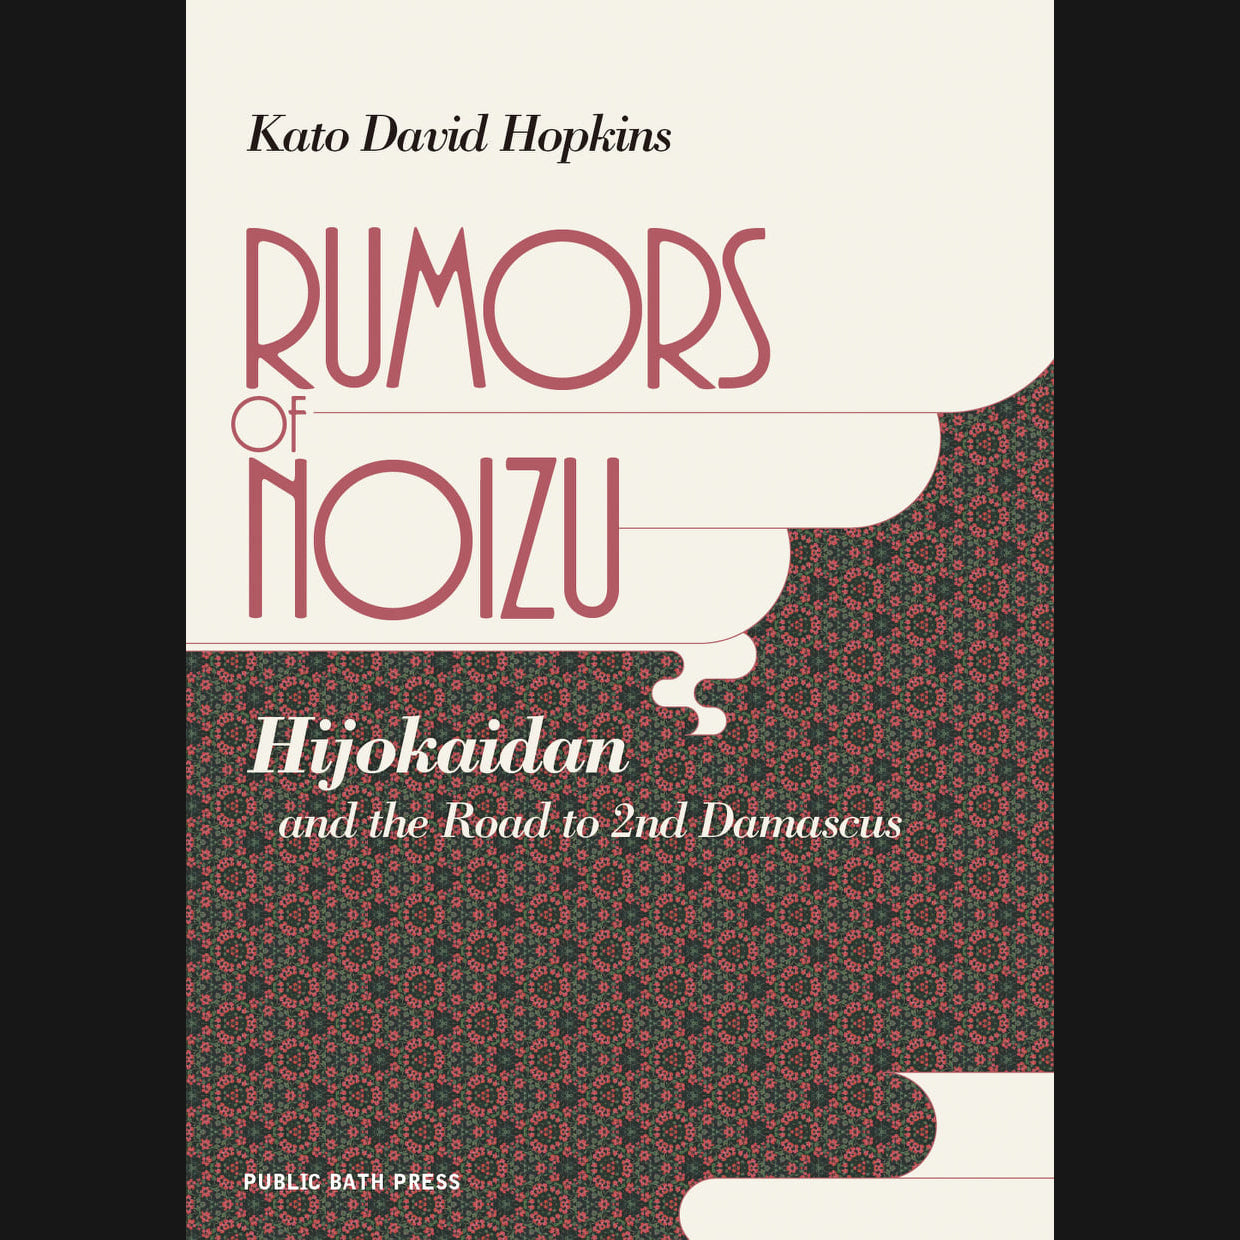 KATO DAVID HOPKINS - "RUMORS OF NOIZU: HIJOKAIDAN AND THE ROAD TO 2ND DAMASCUS" BOOK